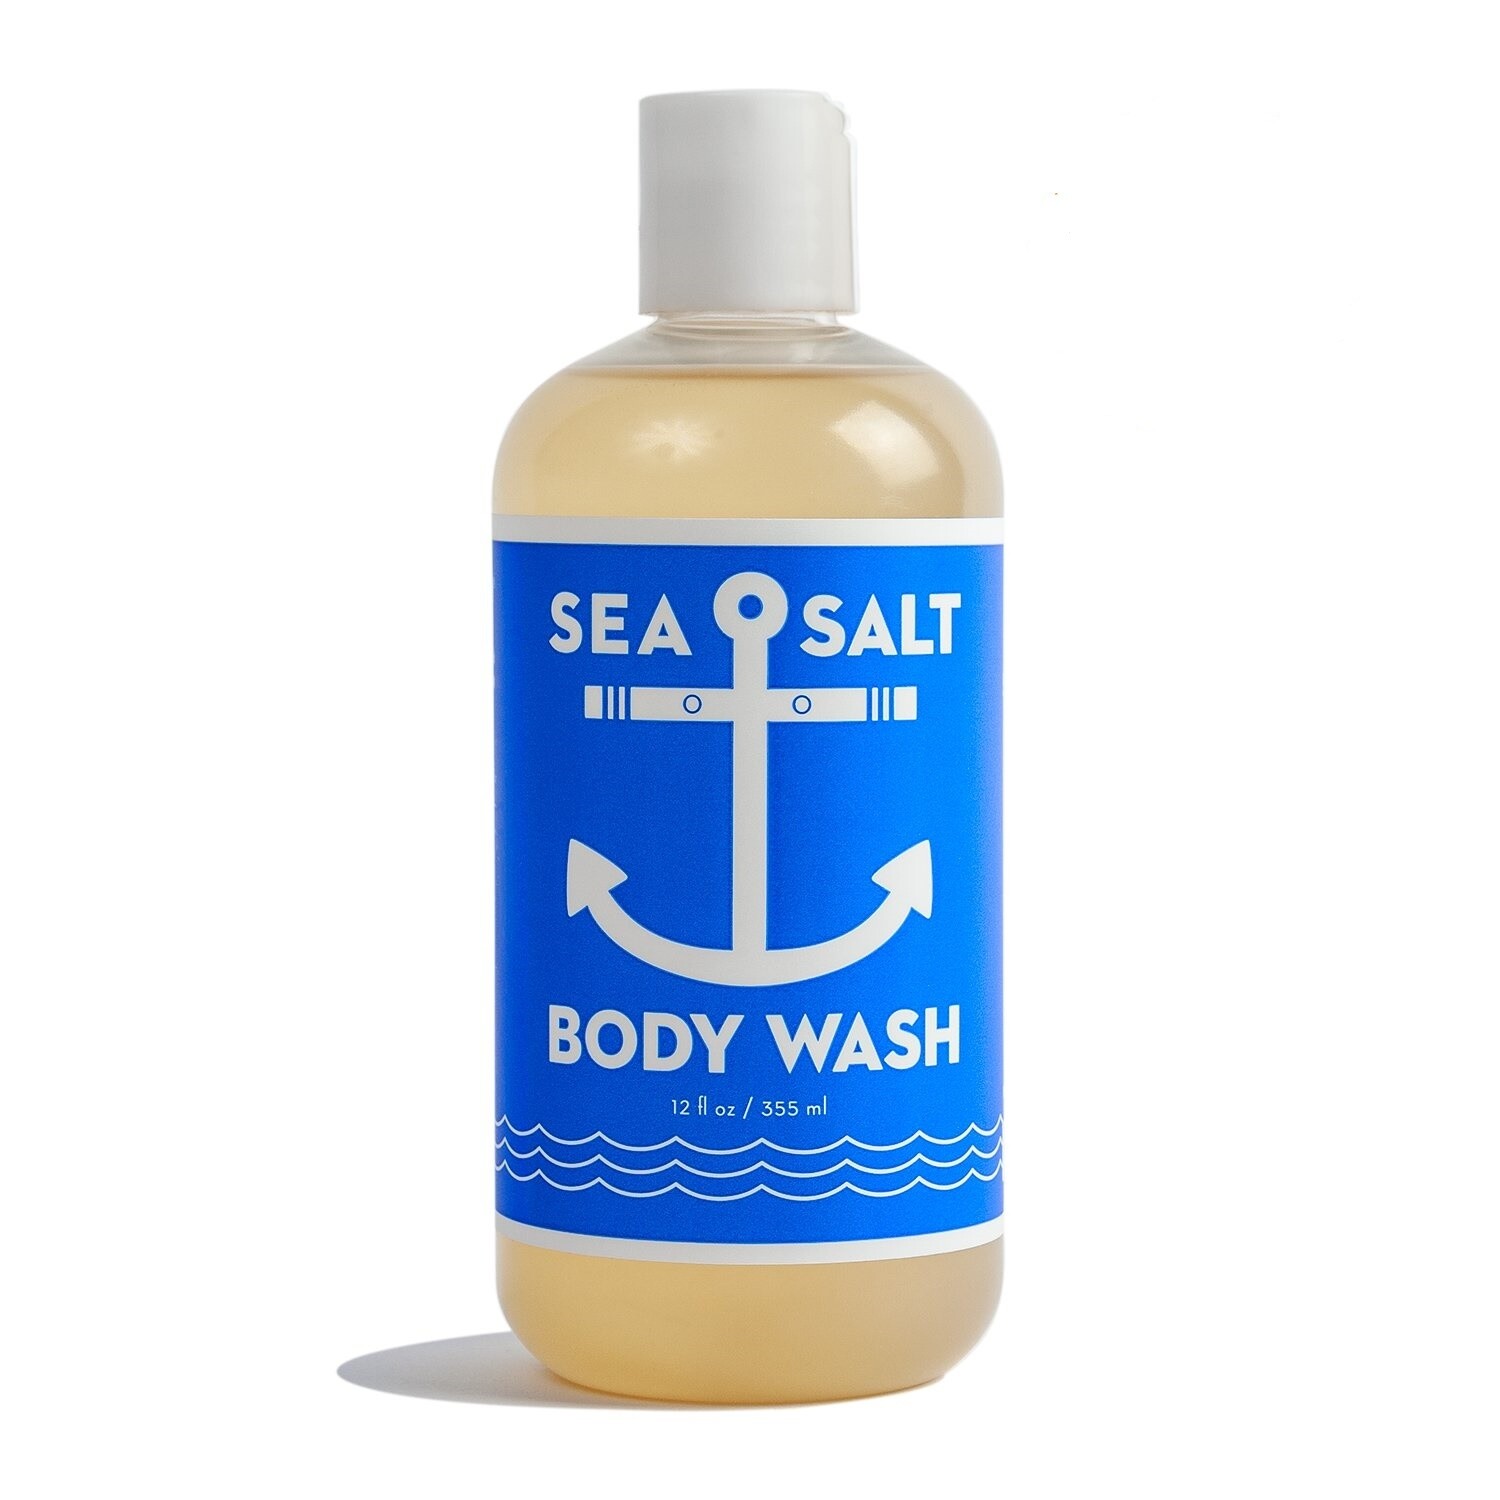 Kalastyle Swedish Dream Organic Sea Salt Body Wash